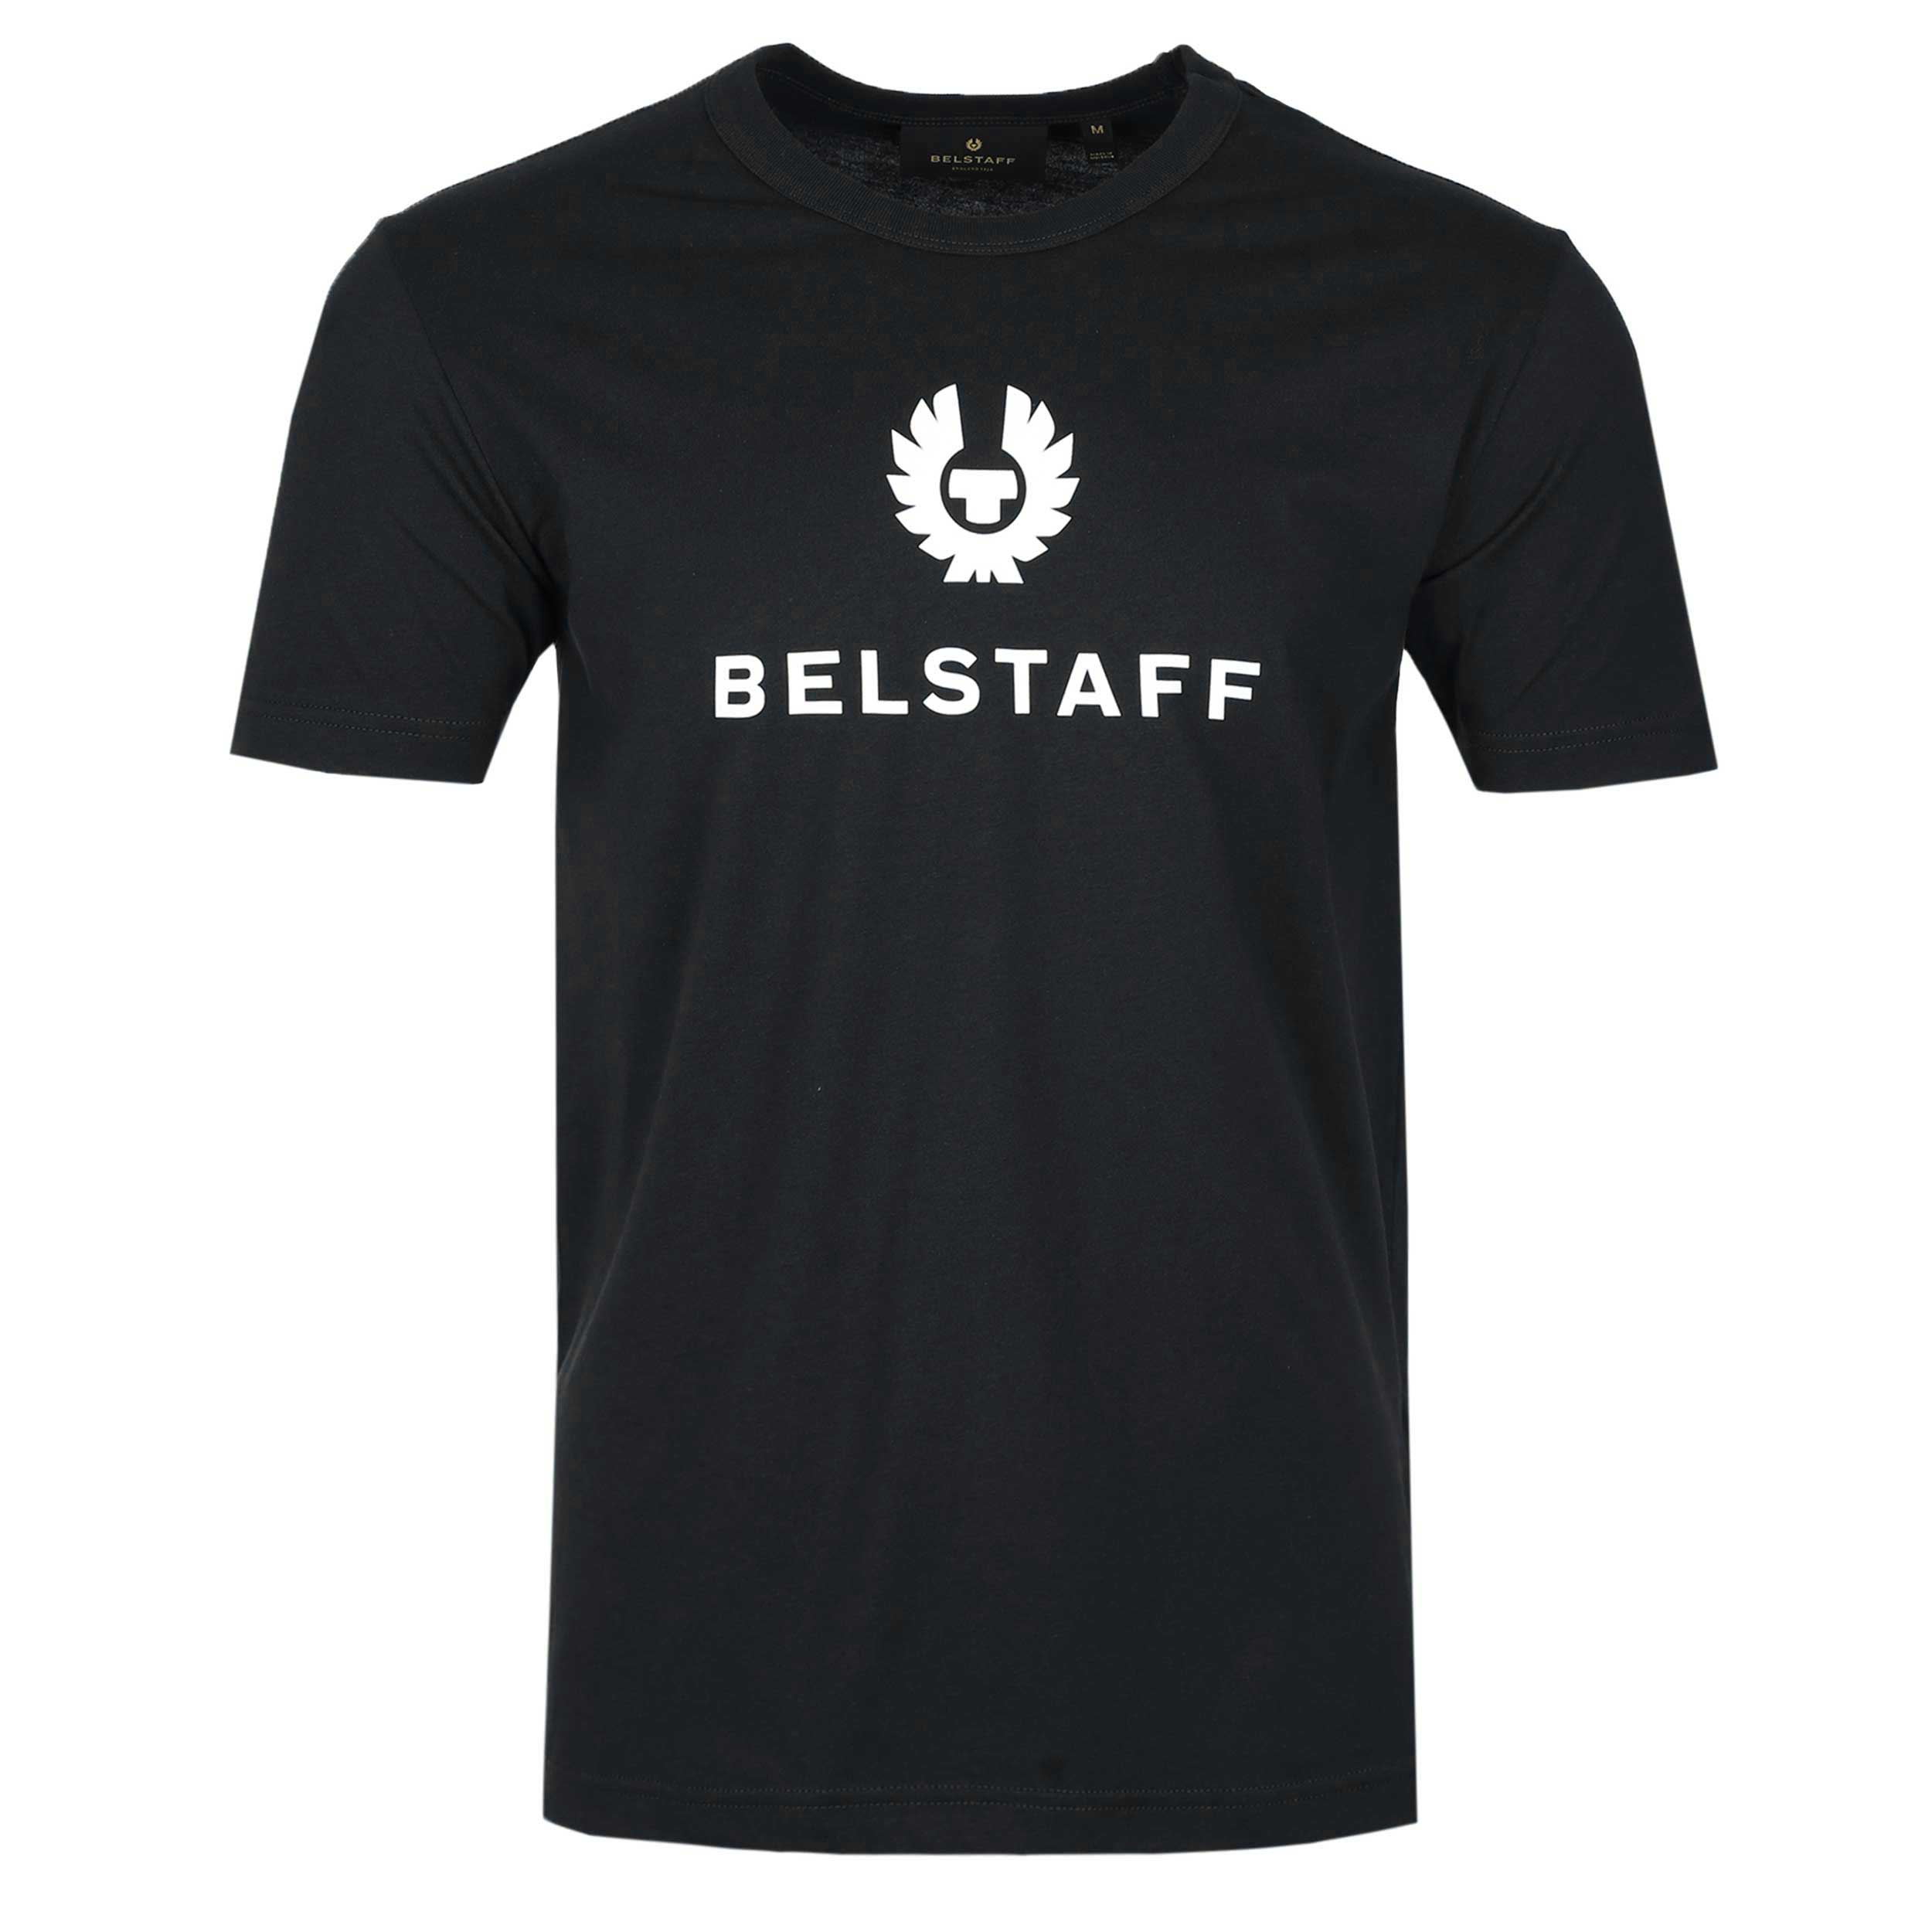 Belstaff Signature T Shirt in Black